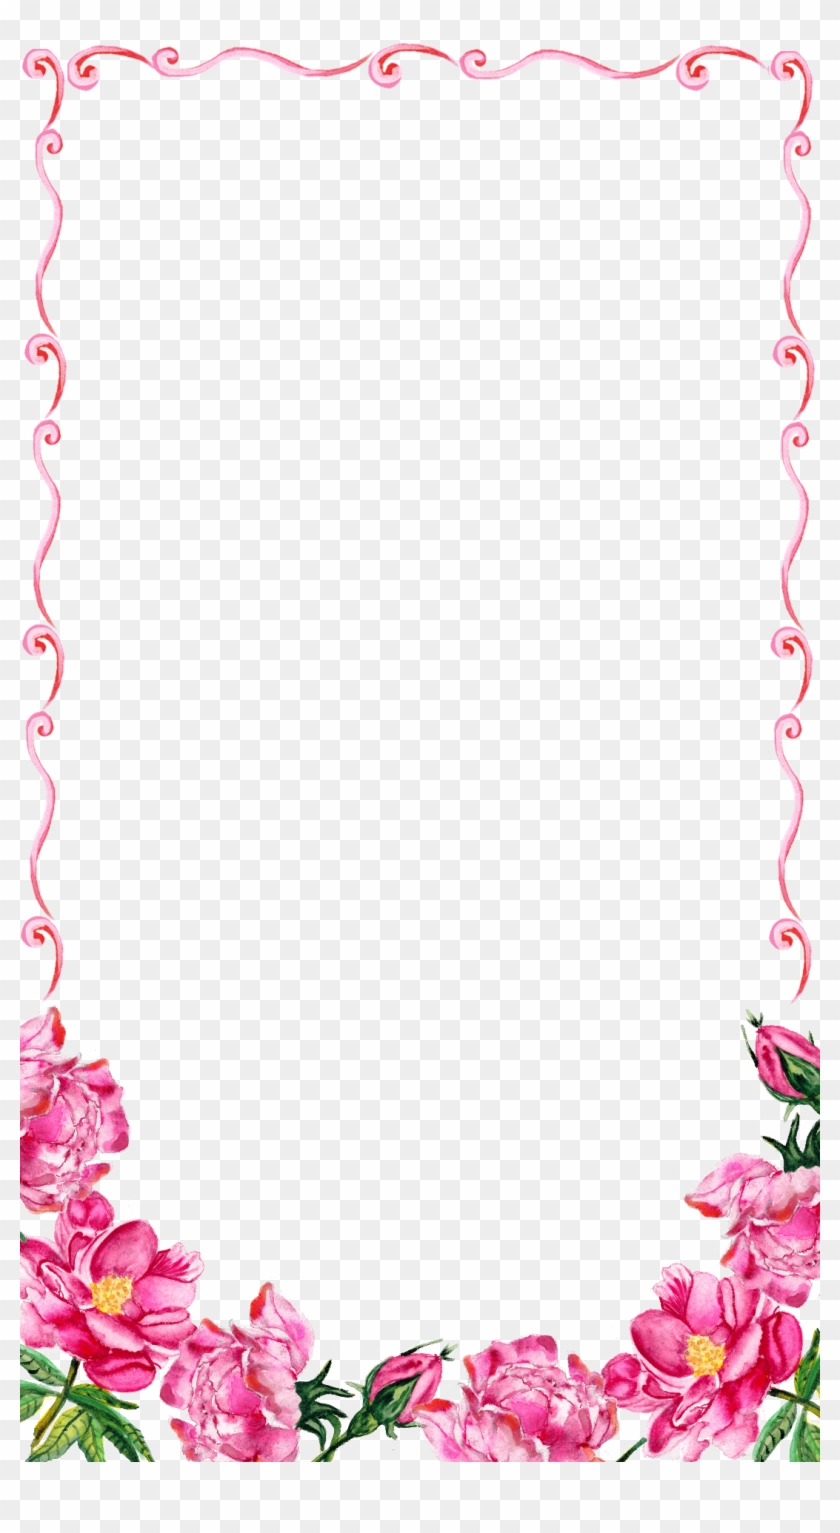 1080 X 1920 34 - Floral Border Transparent Background Clipart #145921